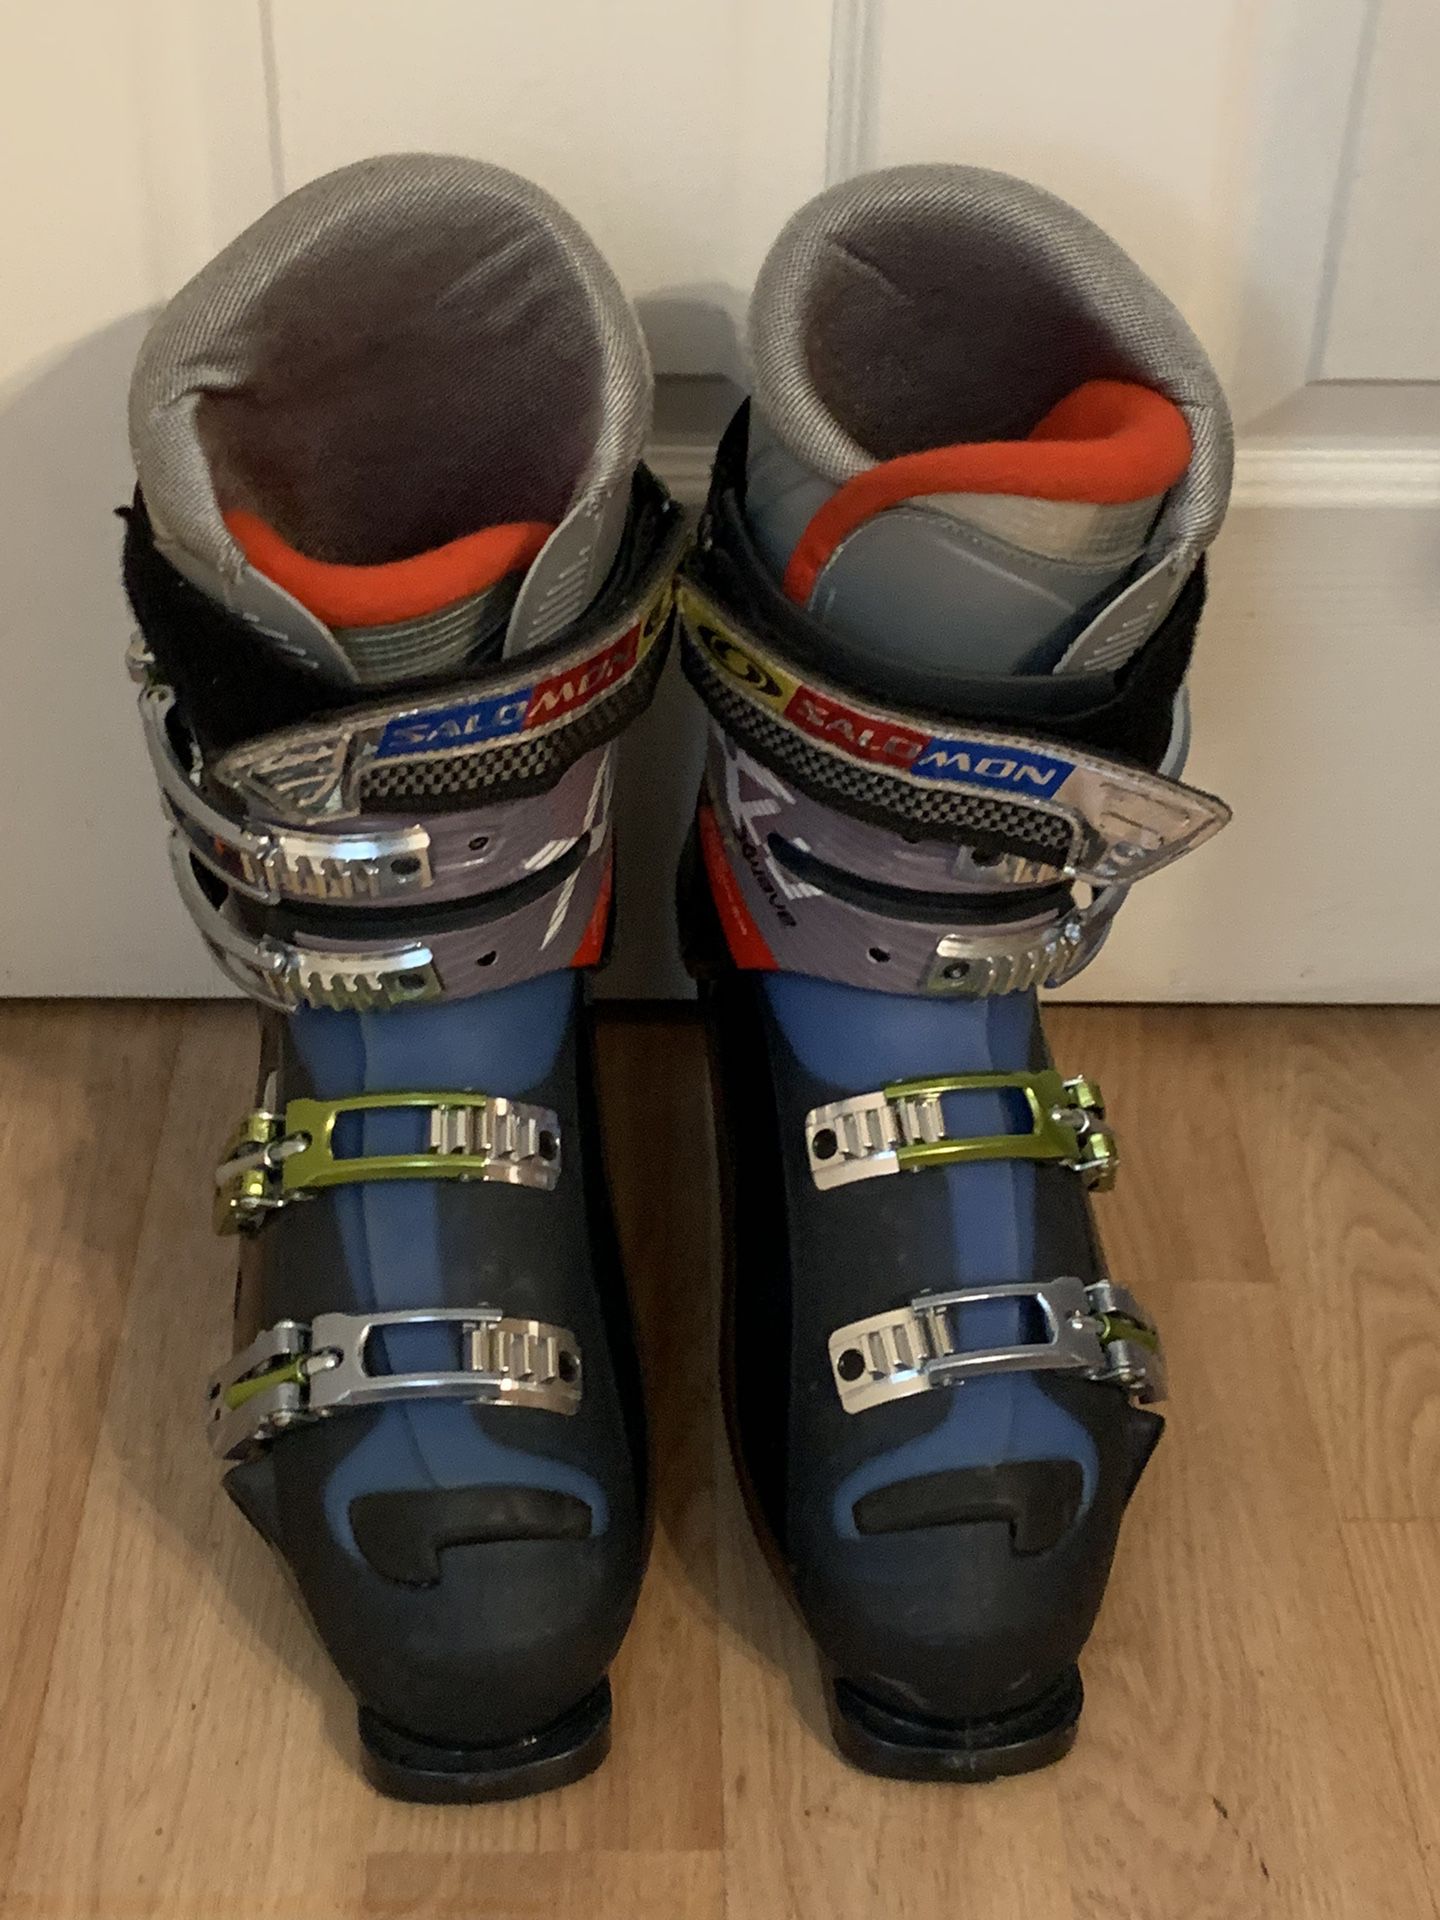 Salomon XWAVE Ski Boots  Size 12.5 / 29.5 / 335mm Great Condition